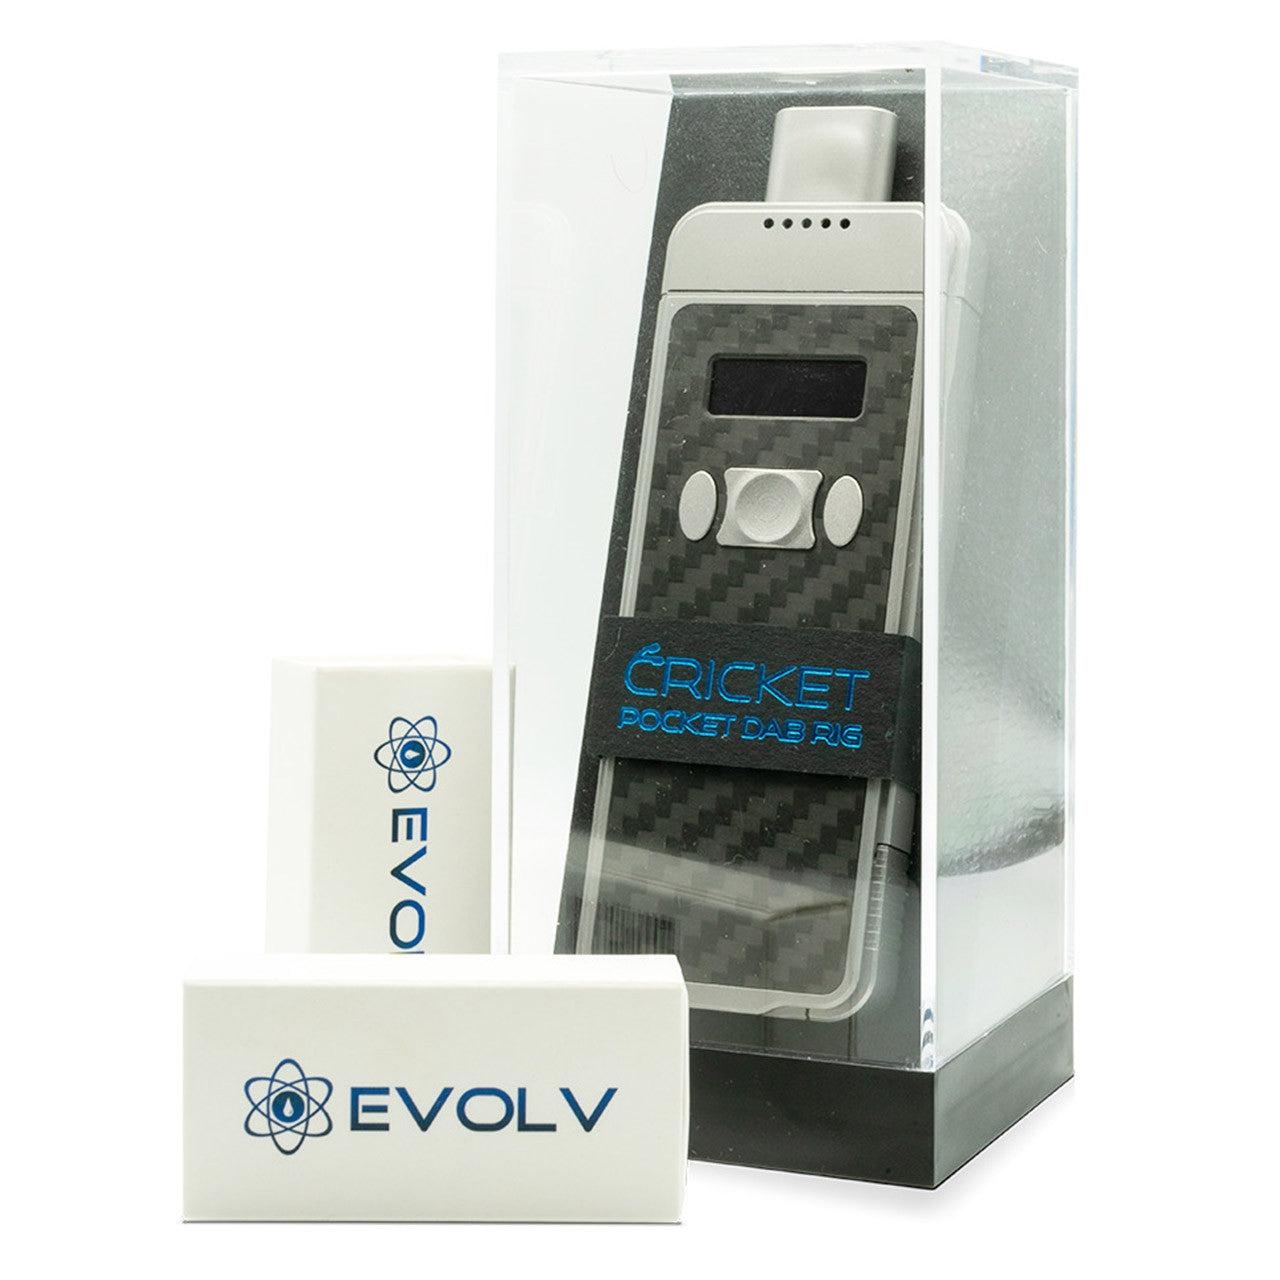 Evolv - Cricket 850mAh Pocket Vaporizer Kit - Online Vape Shop | Alternative pods | Affordable Vapor Store | Vape Disposables